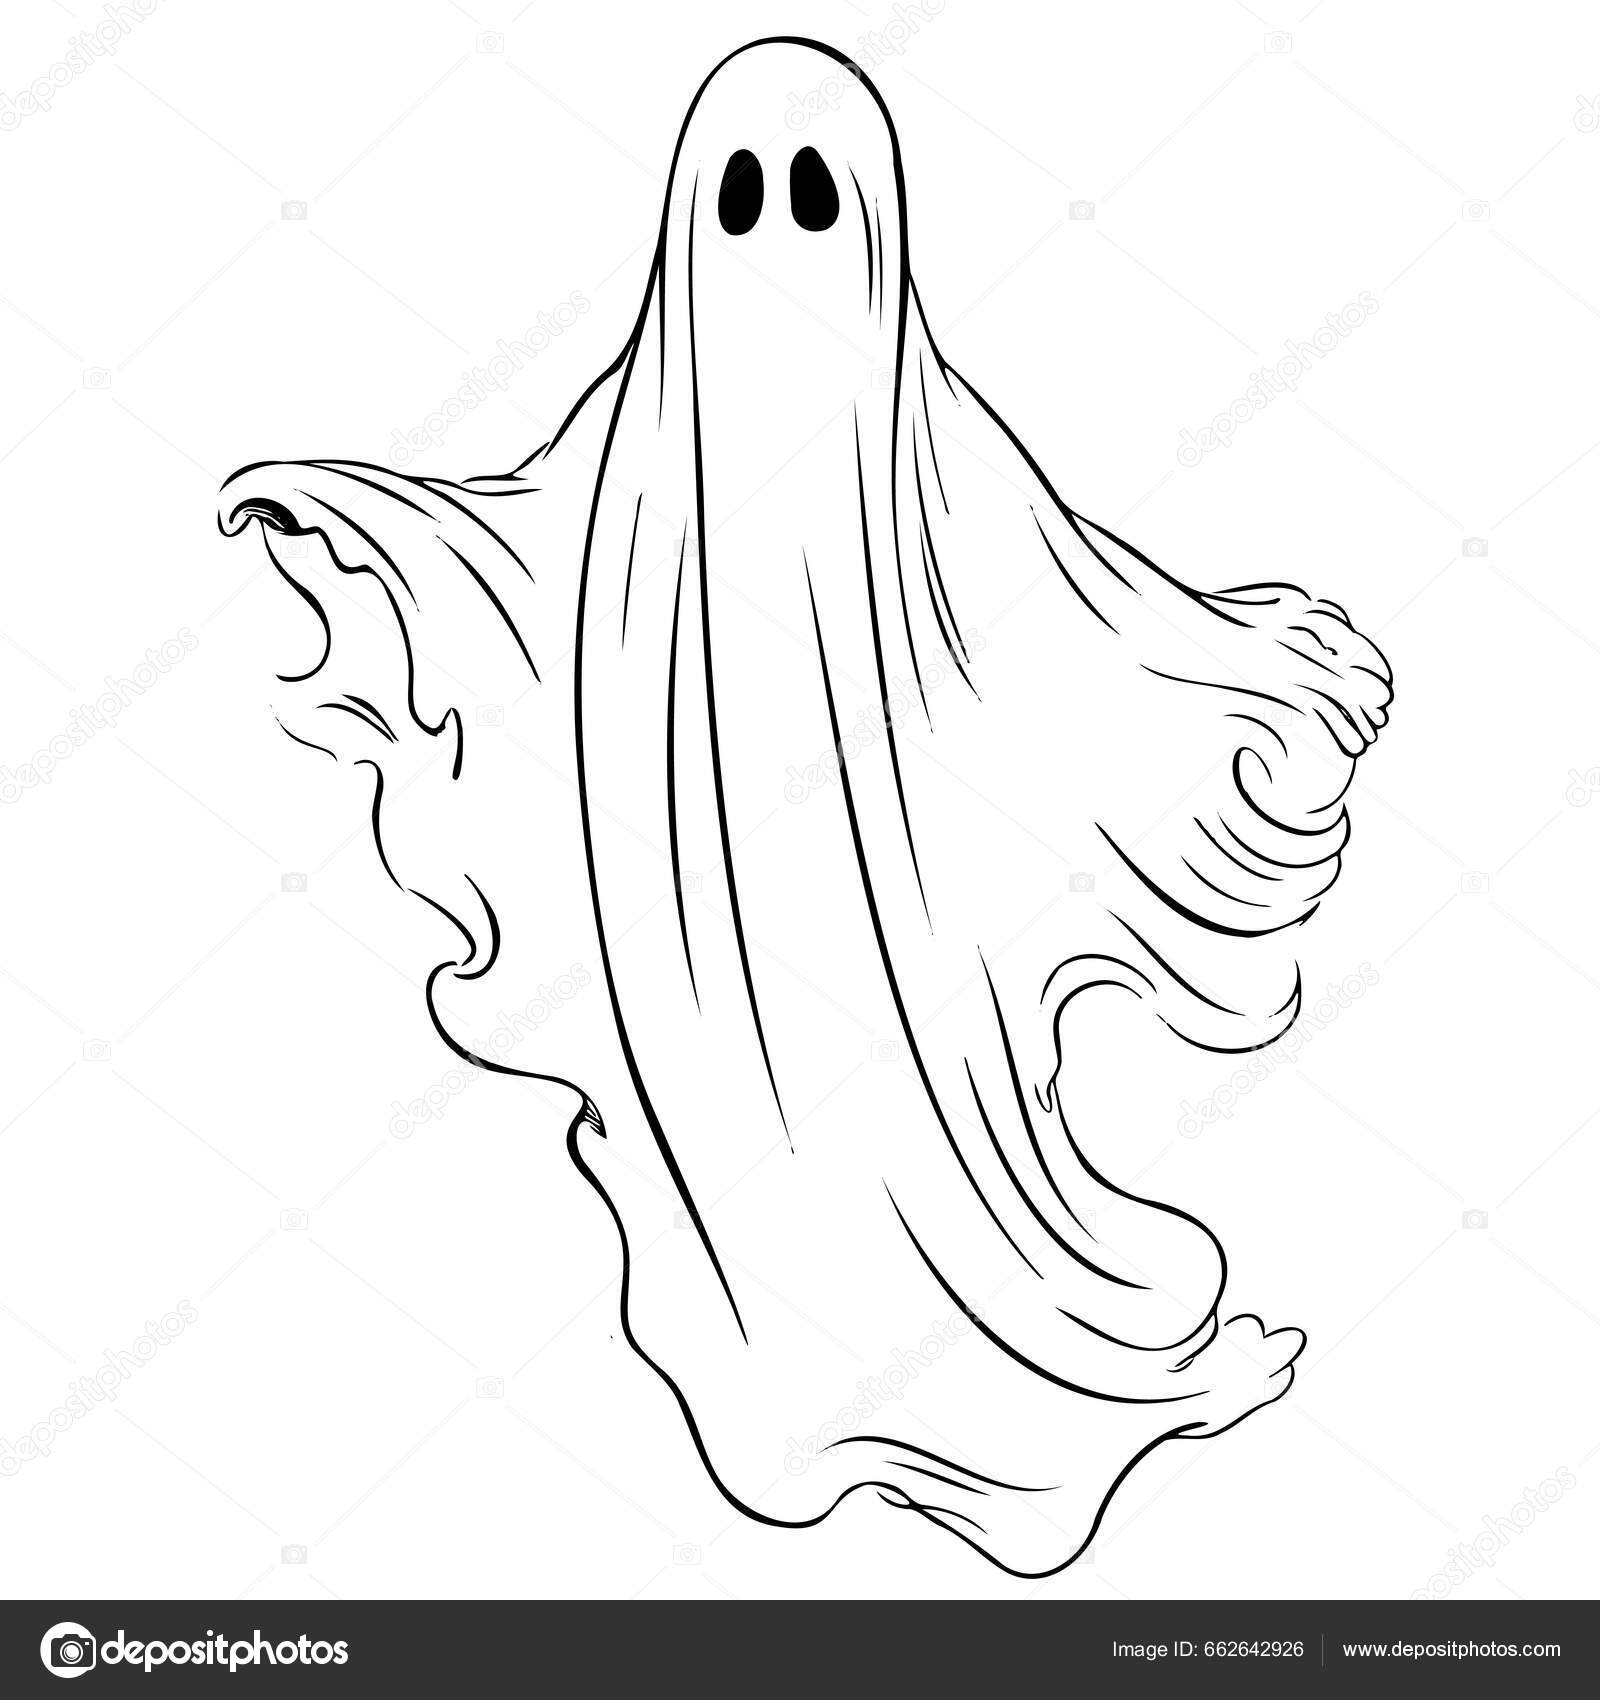 Desenho de fantasma de halloween para adultos